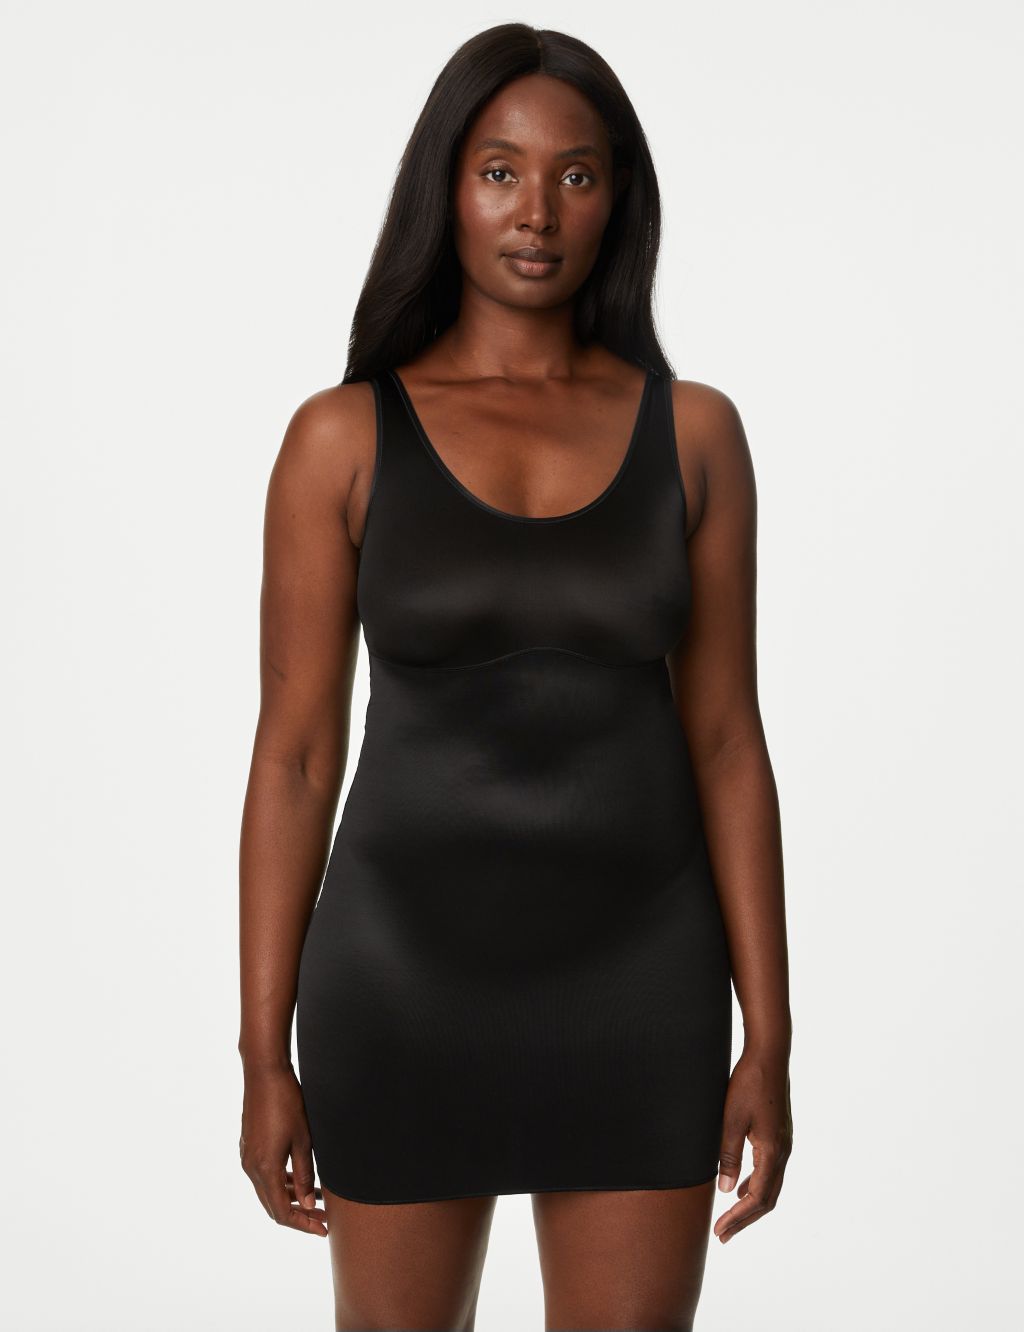 Full Slips for Women Under Dresses Tummy Control Shapewear Dress Slip Seamless  Body Shaper (Black, XXL)